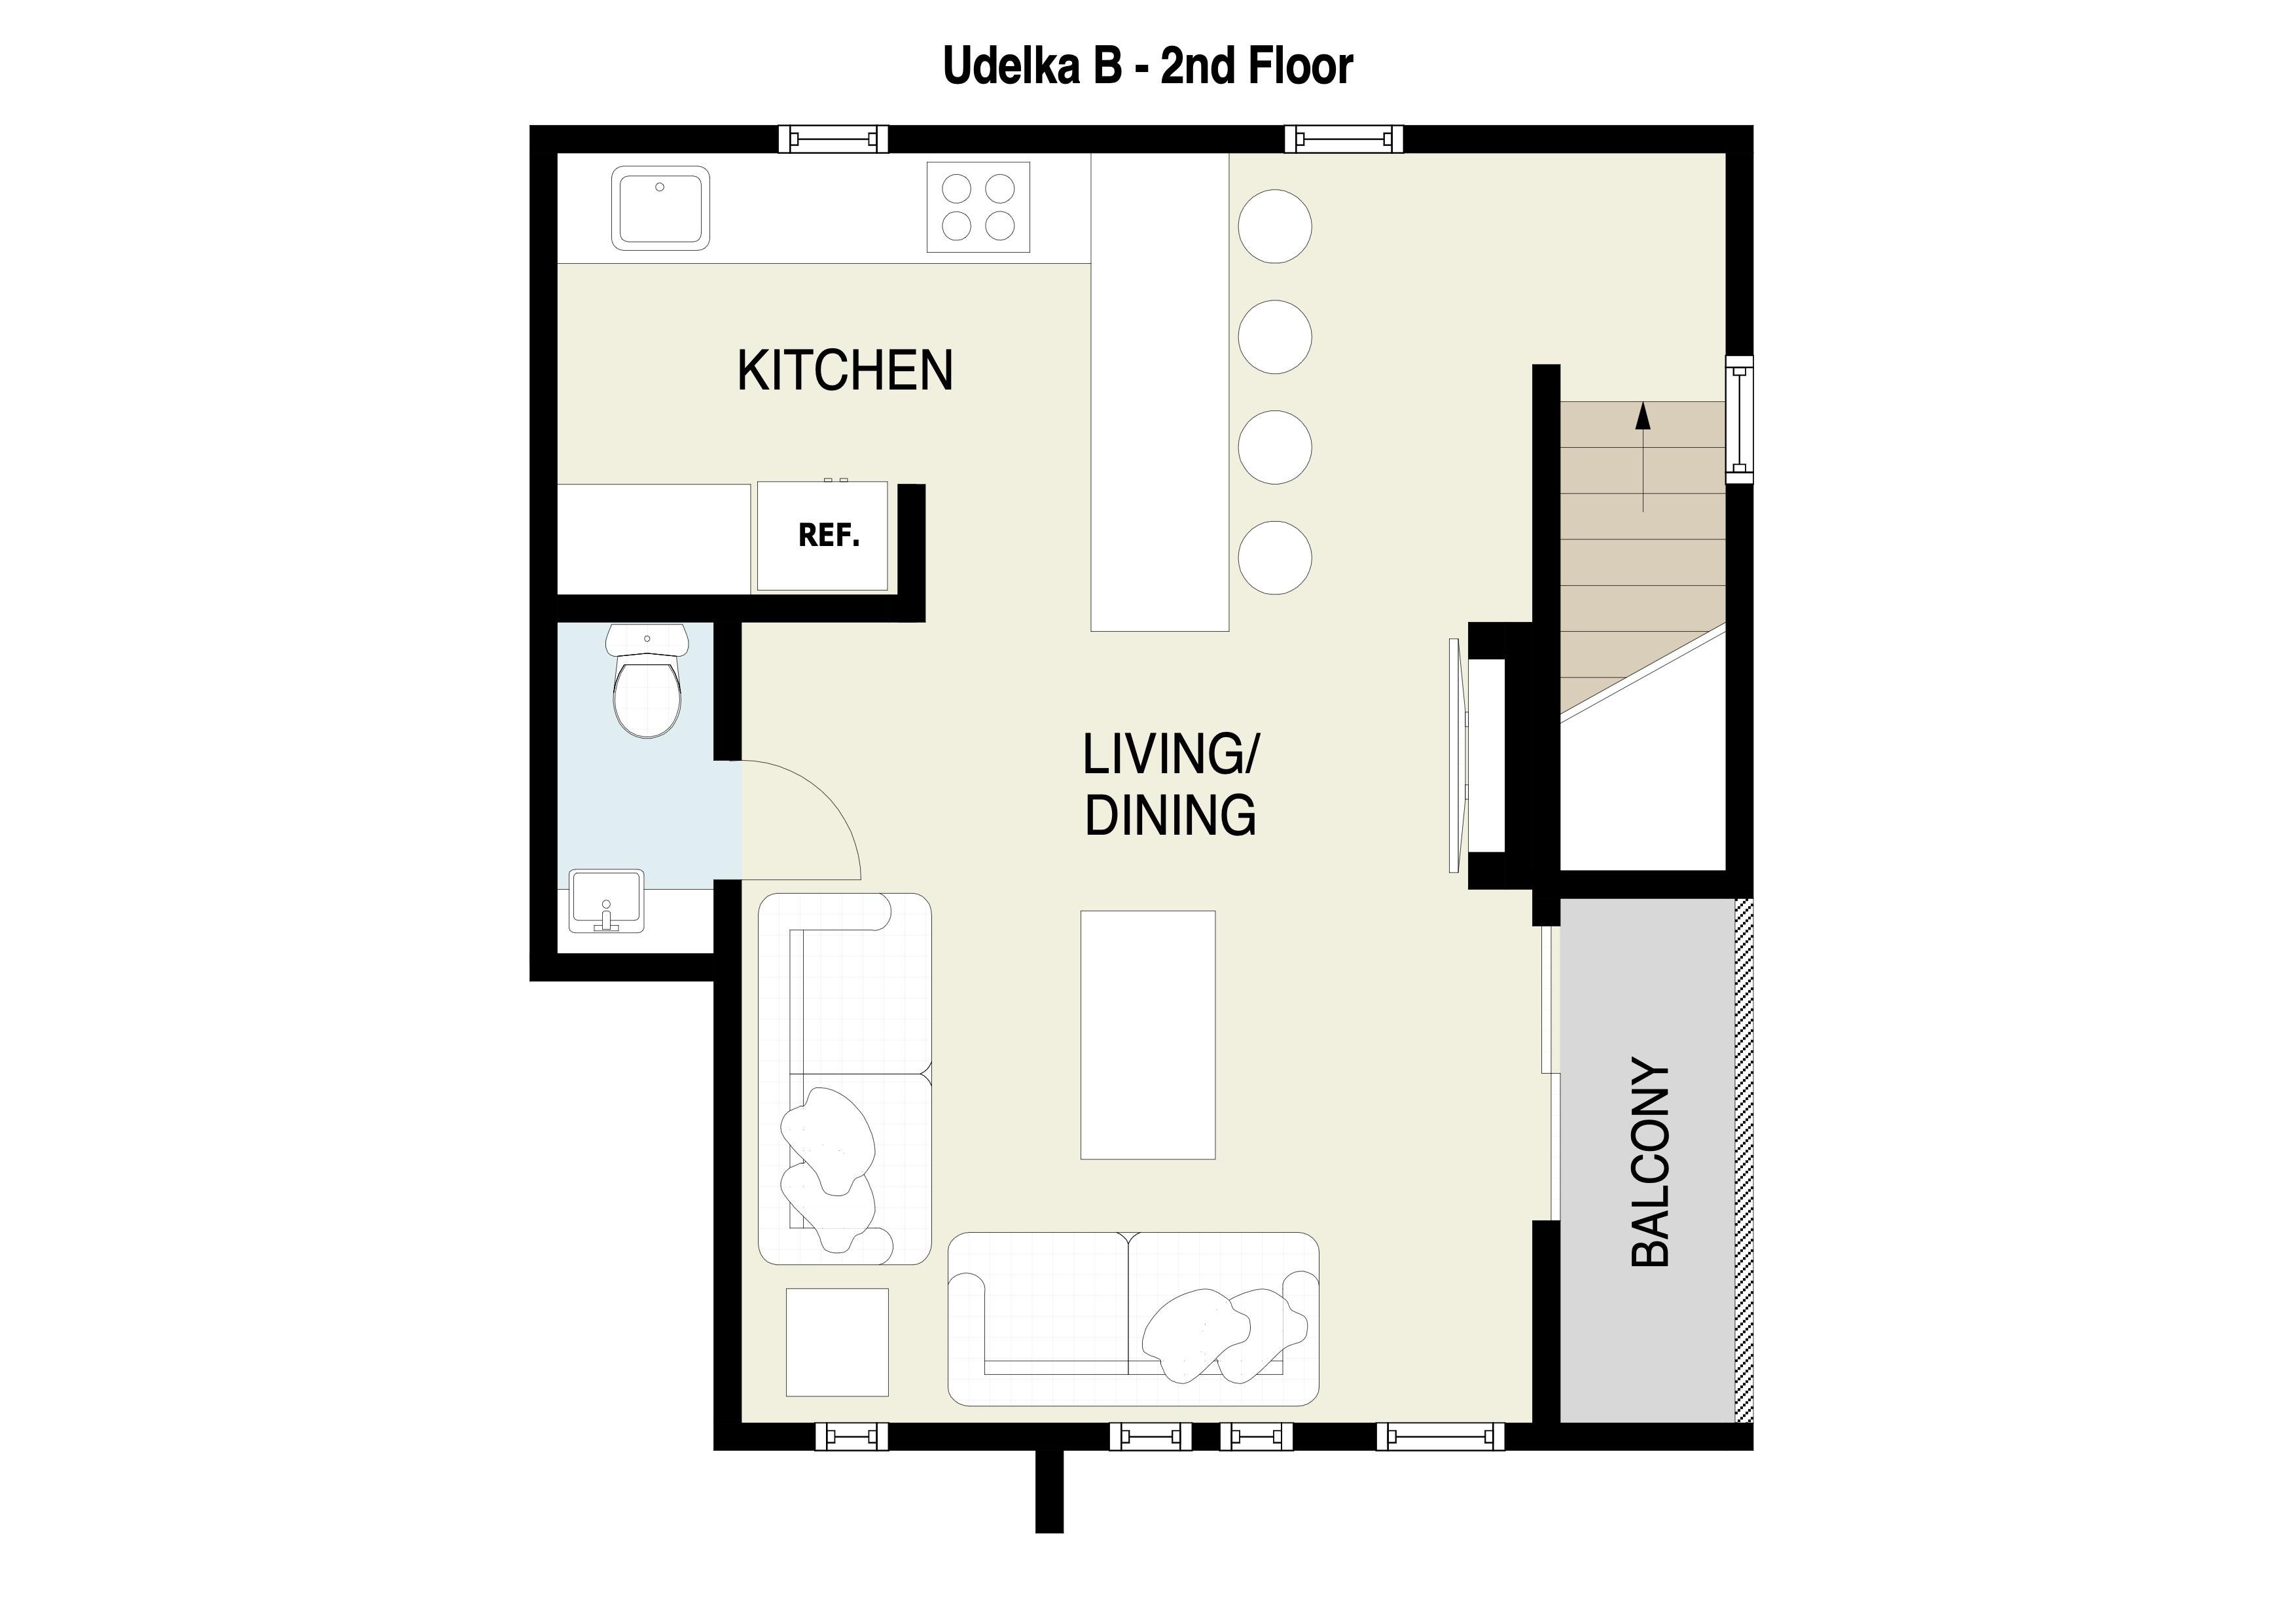 Udelka B 2nd floor plans